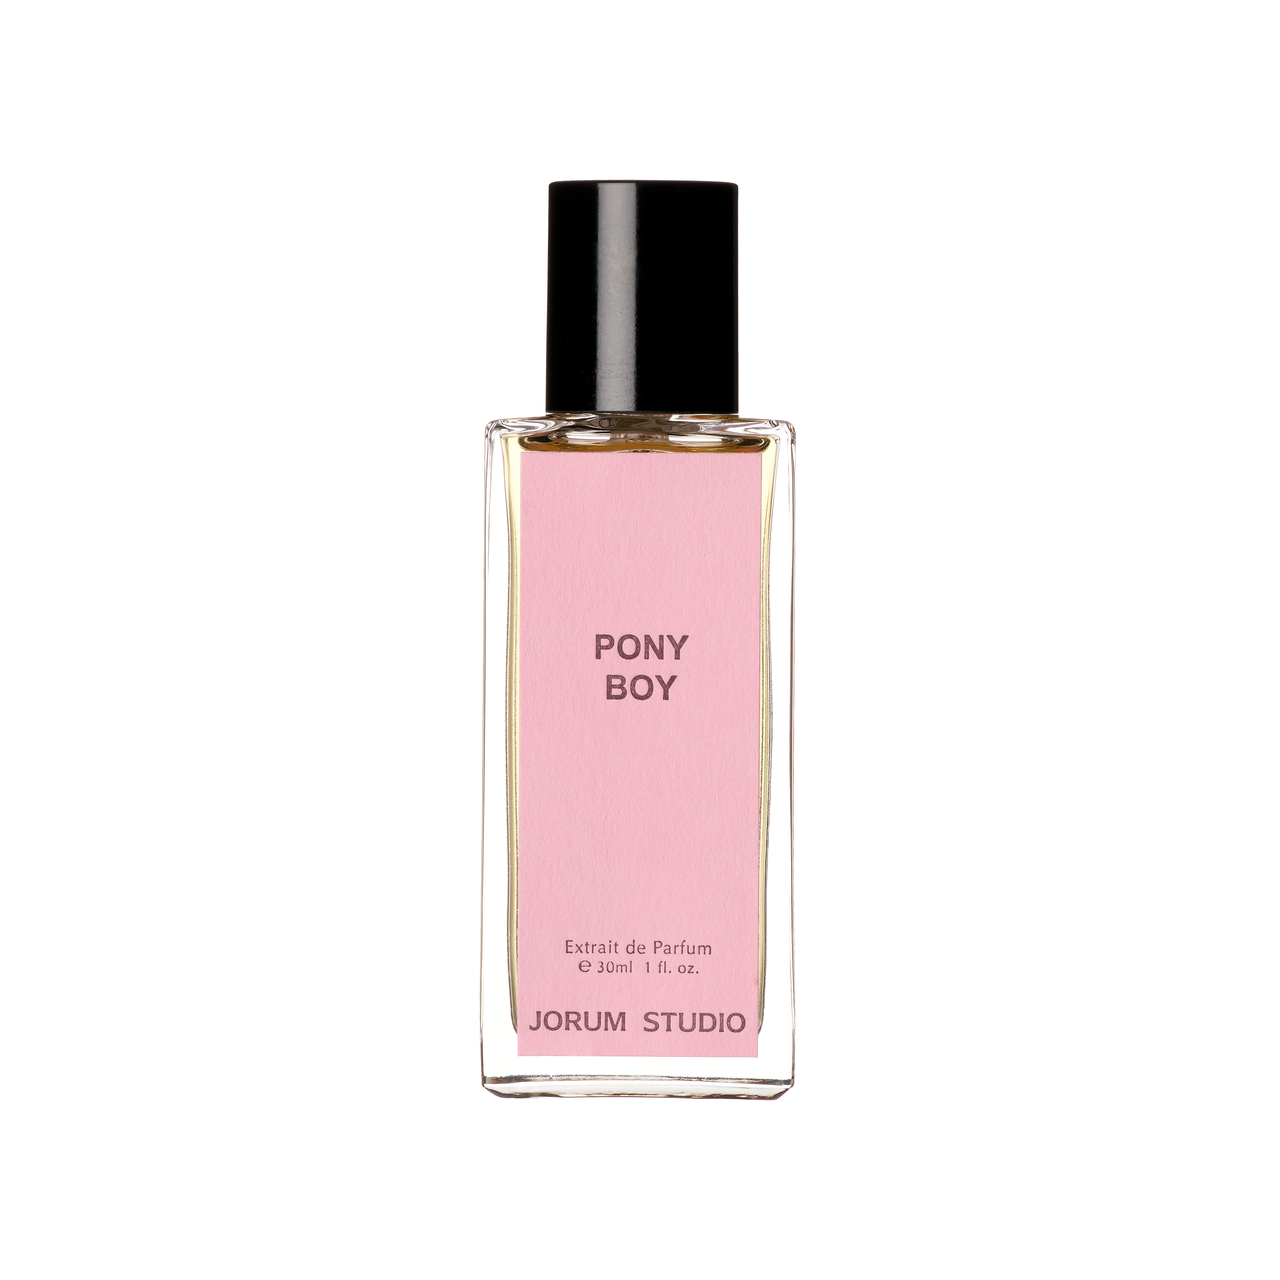 30ml bottle of Pony Boy Extrait de Parfum by independent Scottish perfumers Jorum Studio, with a pale pink label